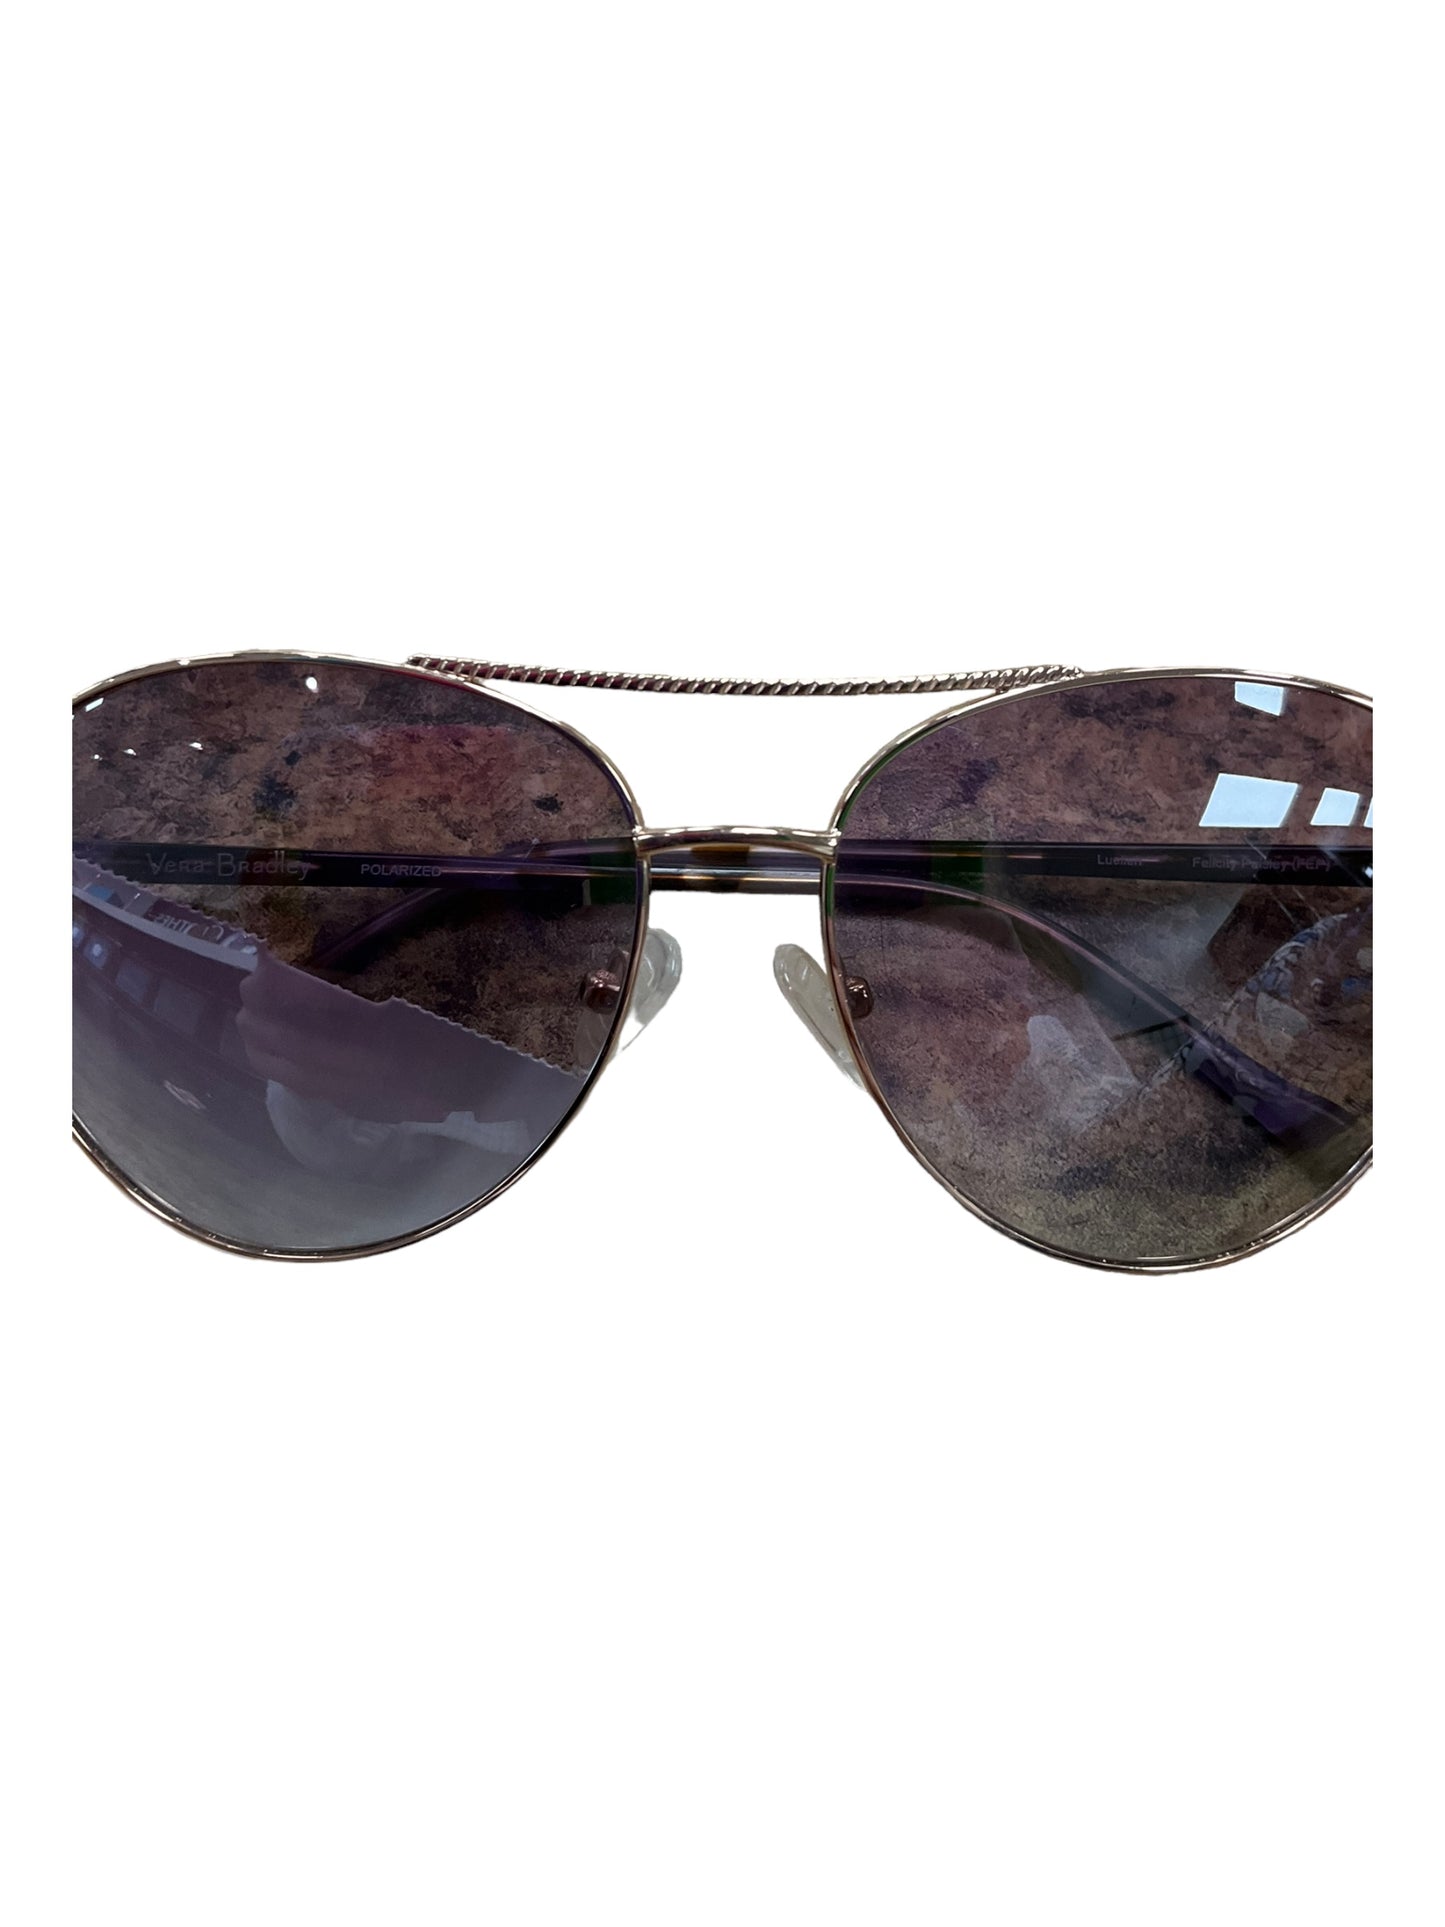 Sunglasses By Vera Bradley  Size: 02 Piece